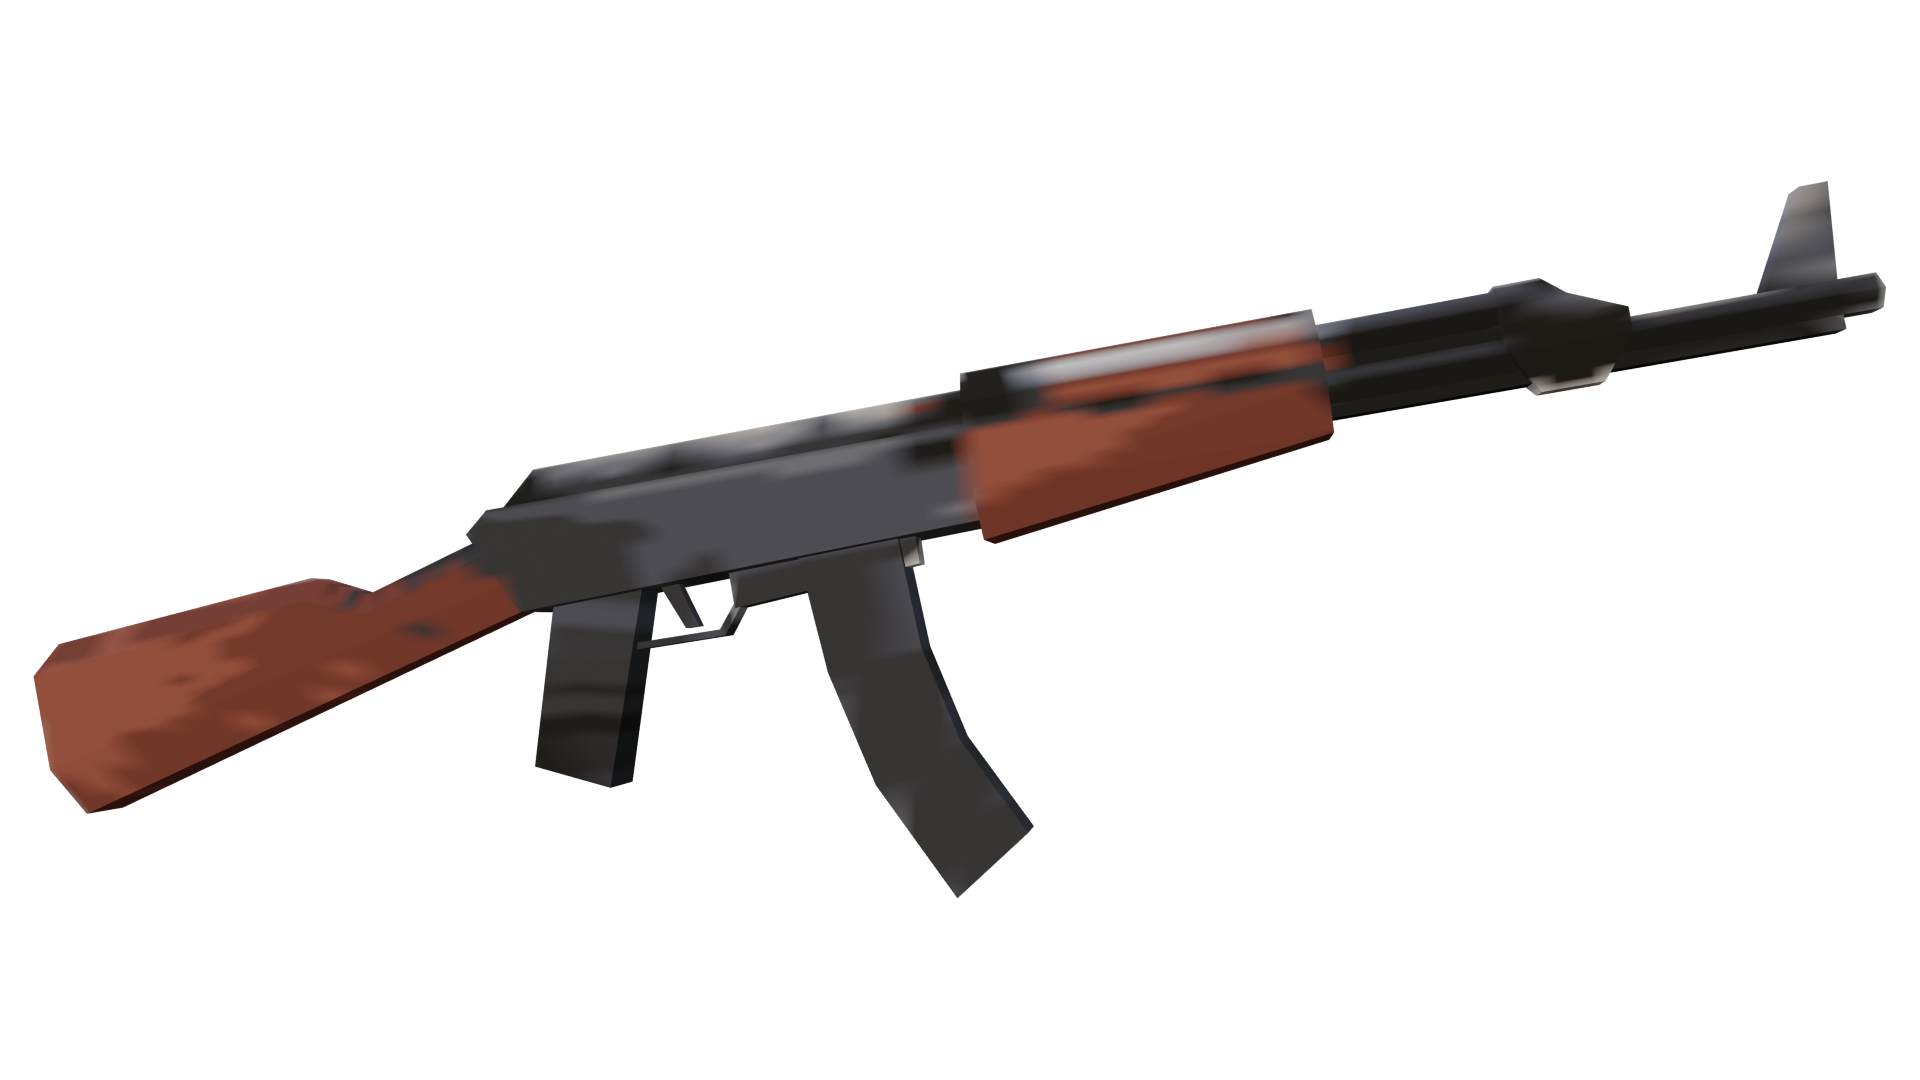 File:Airsoft AK-47.JPG - Wikipedia